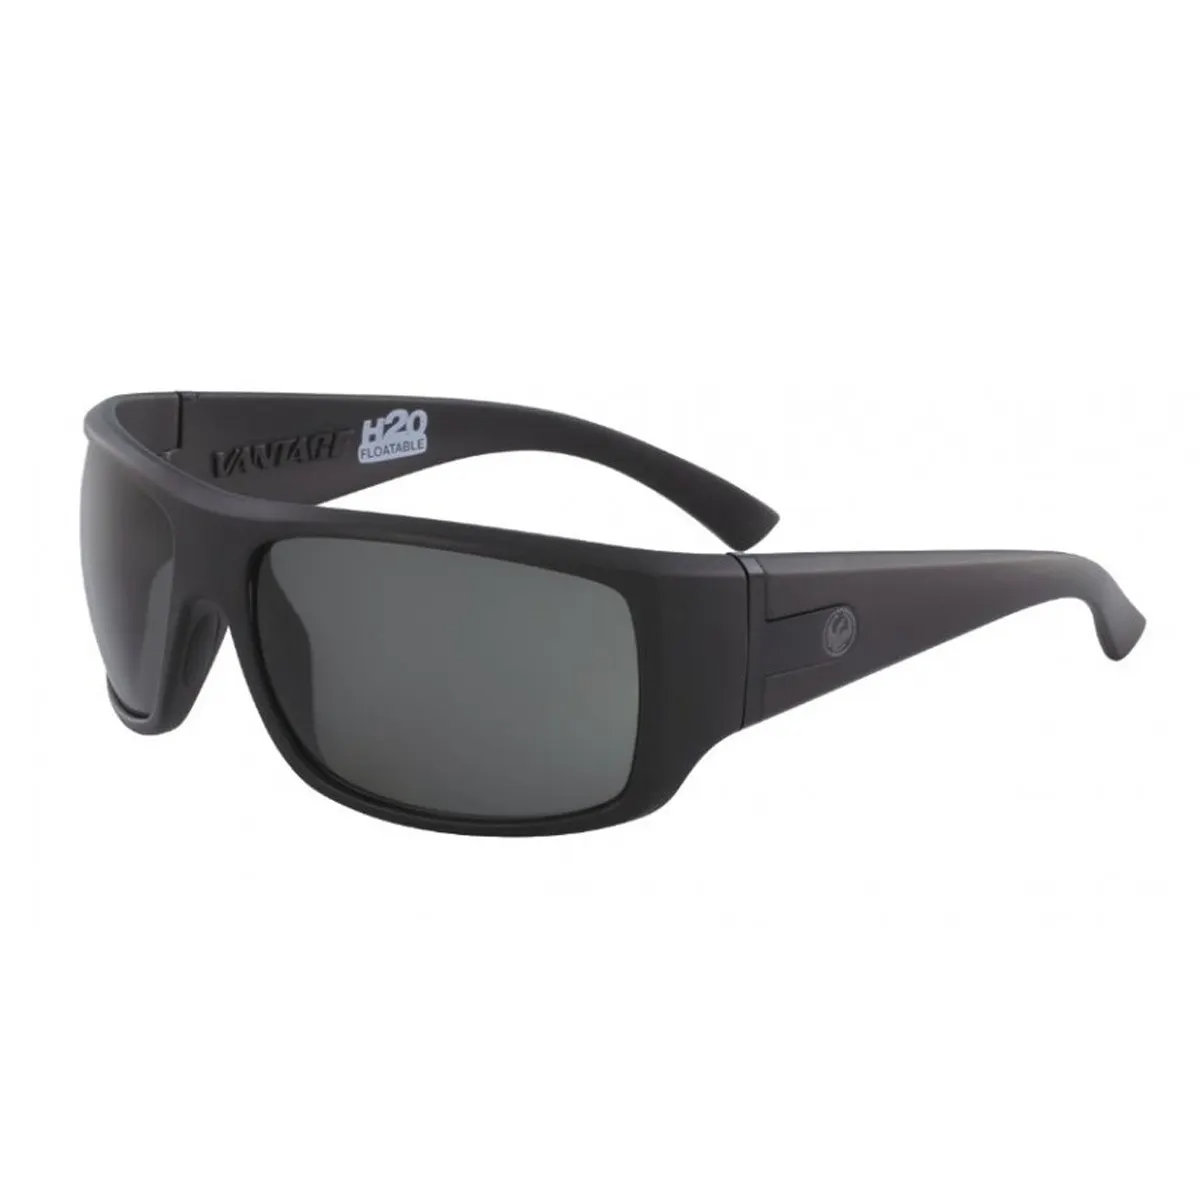 Black dragon rigid sunglasses